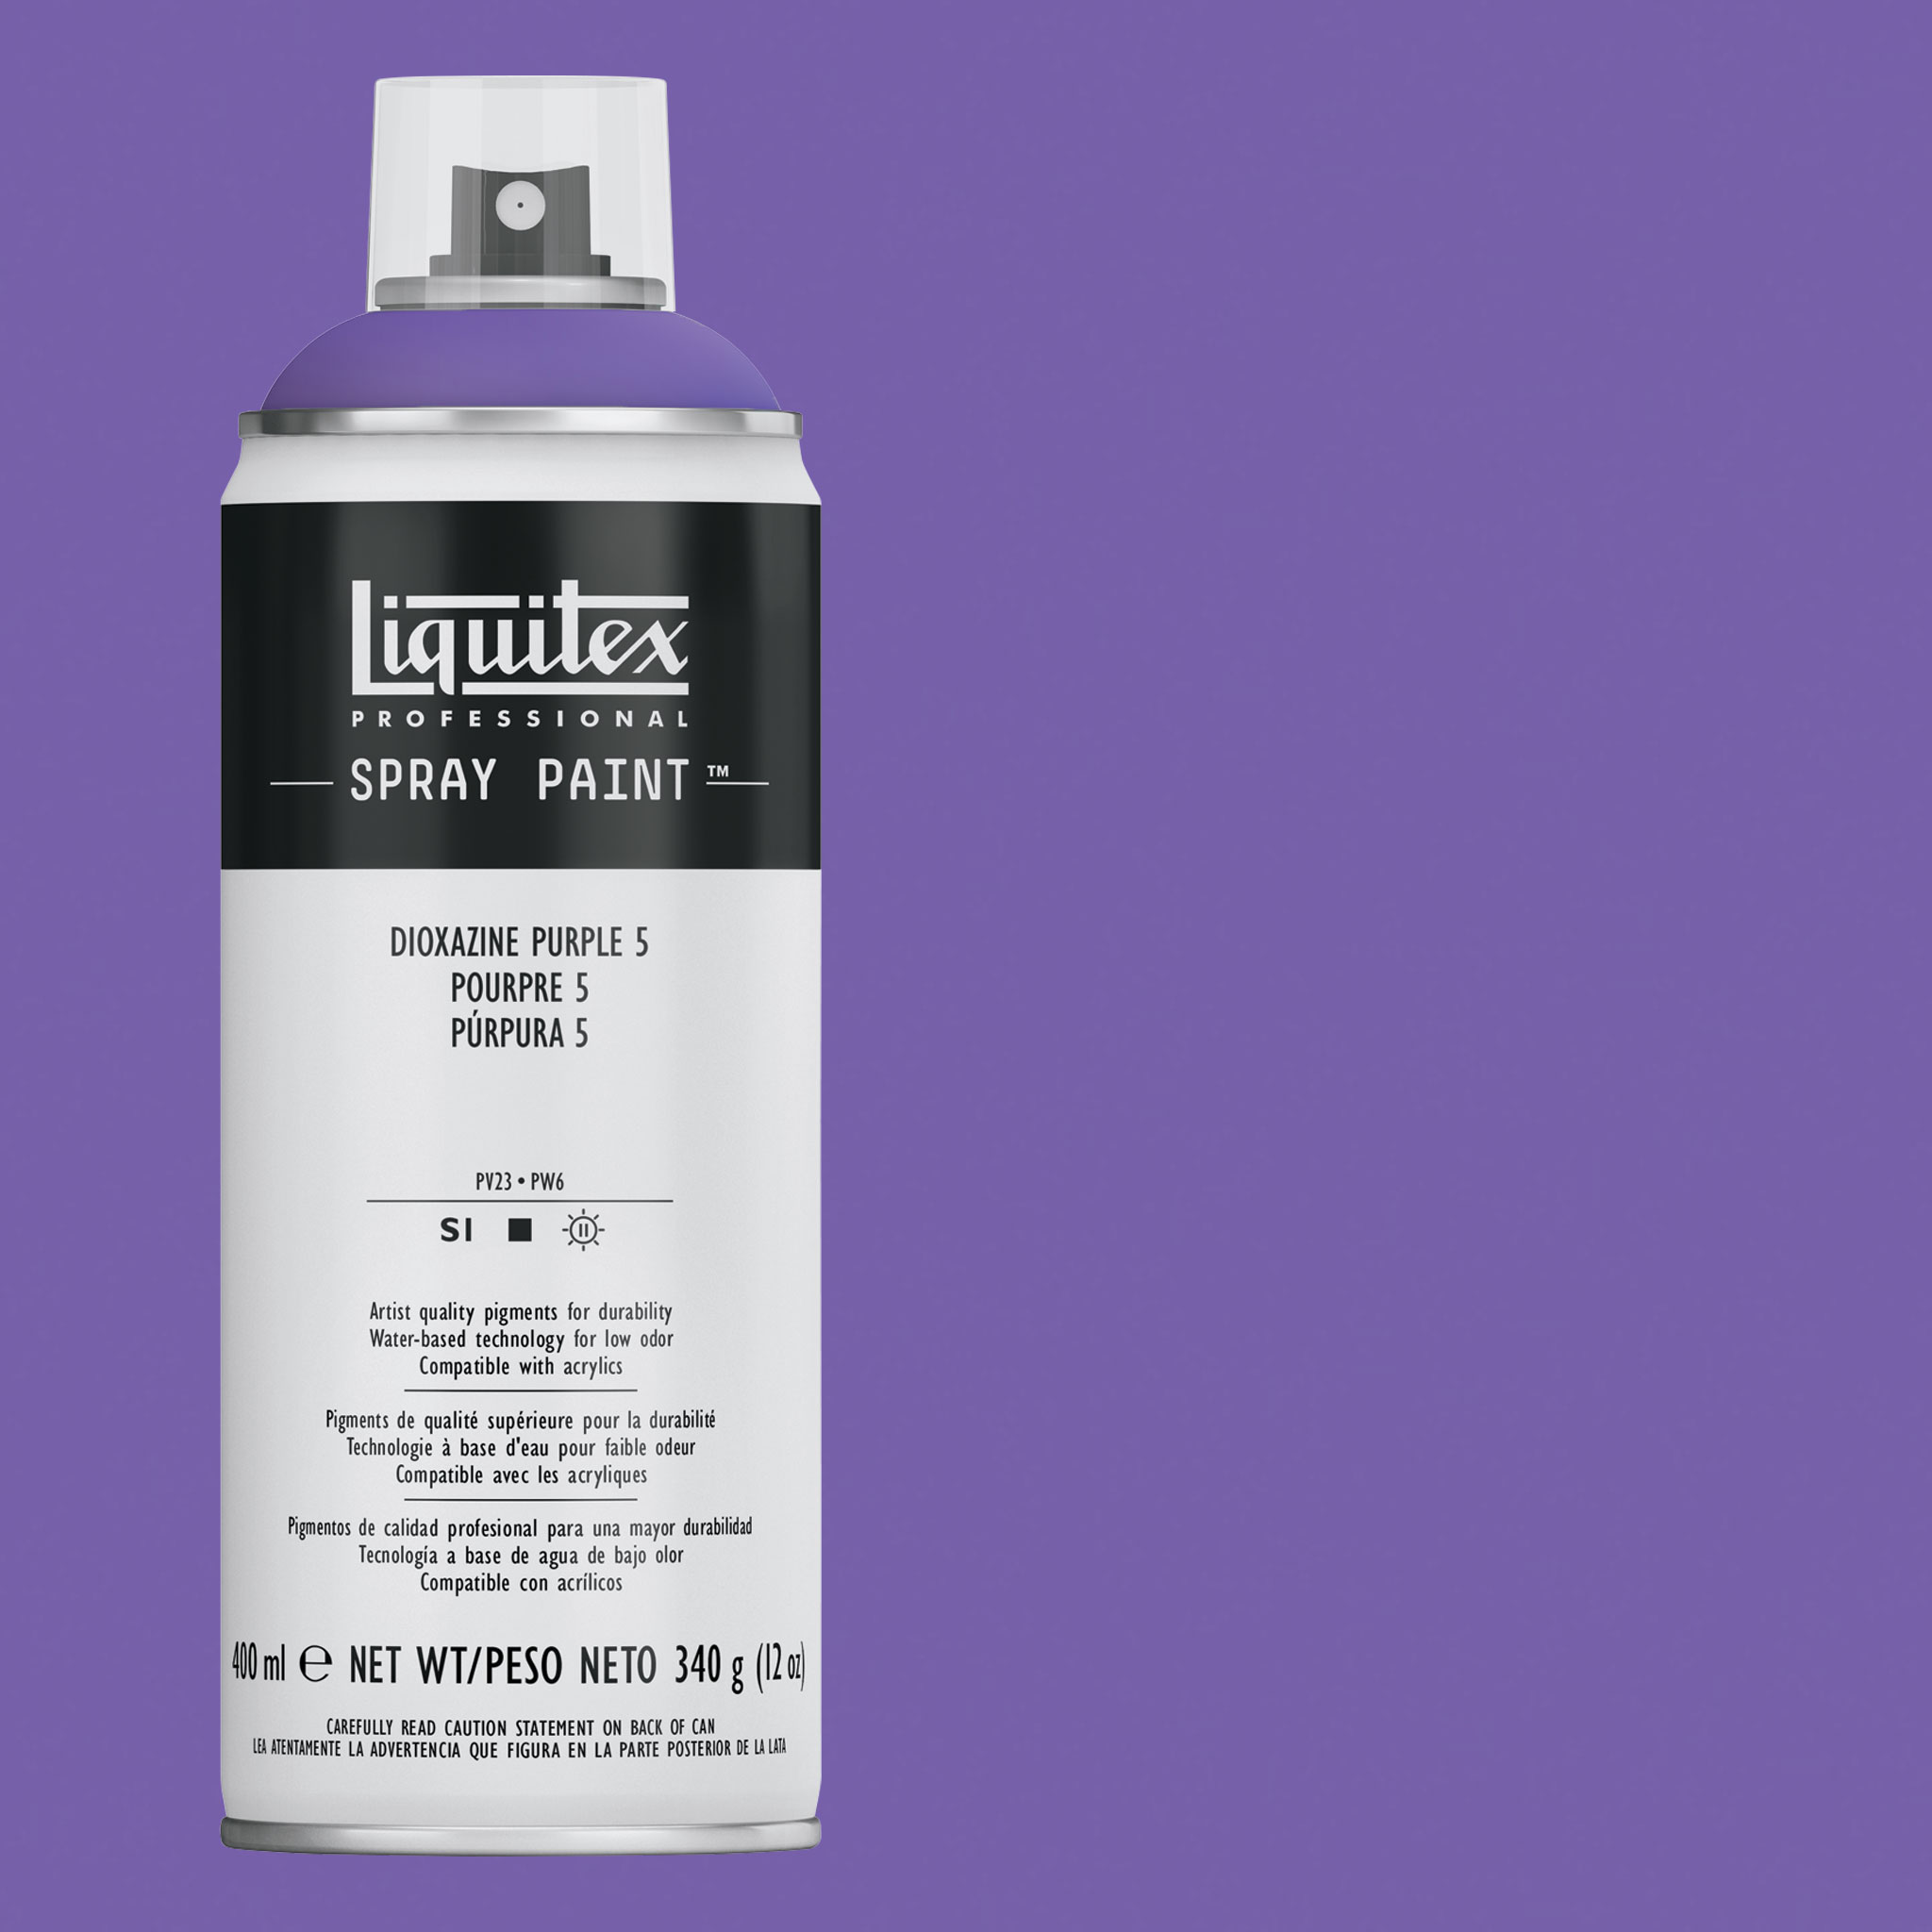 Liquitex Professional Spray Paint 400ml Can - Dioxazine Purple